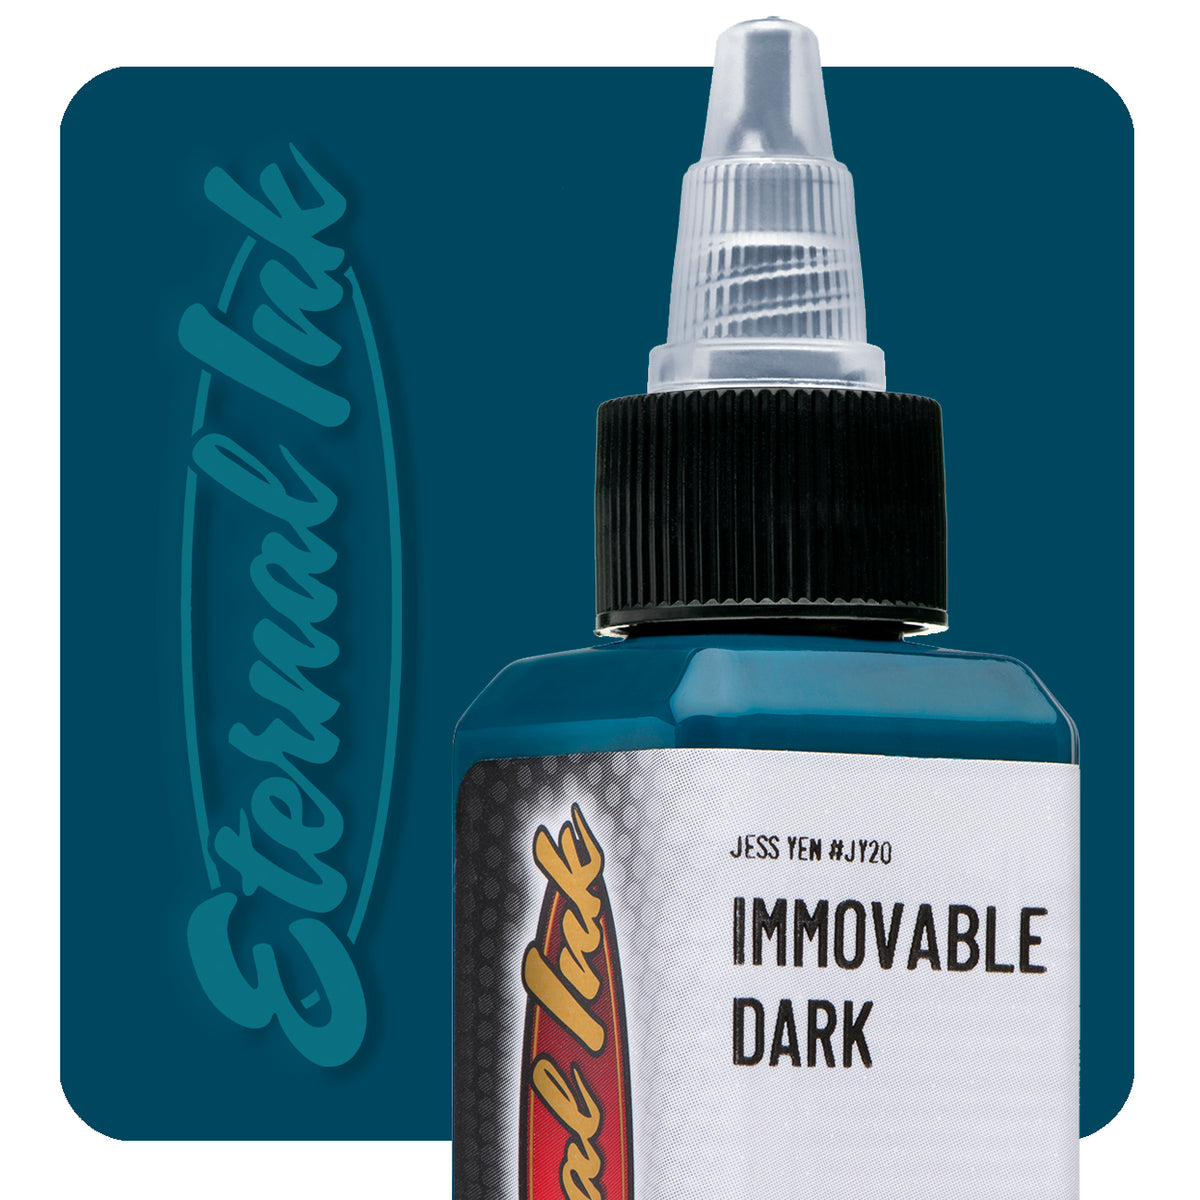 Immovable Dark